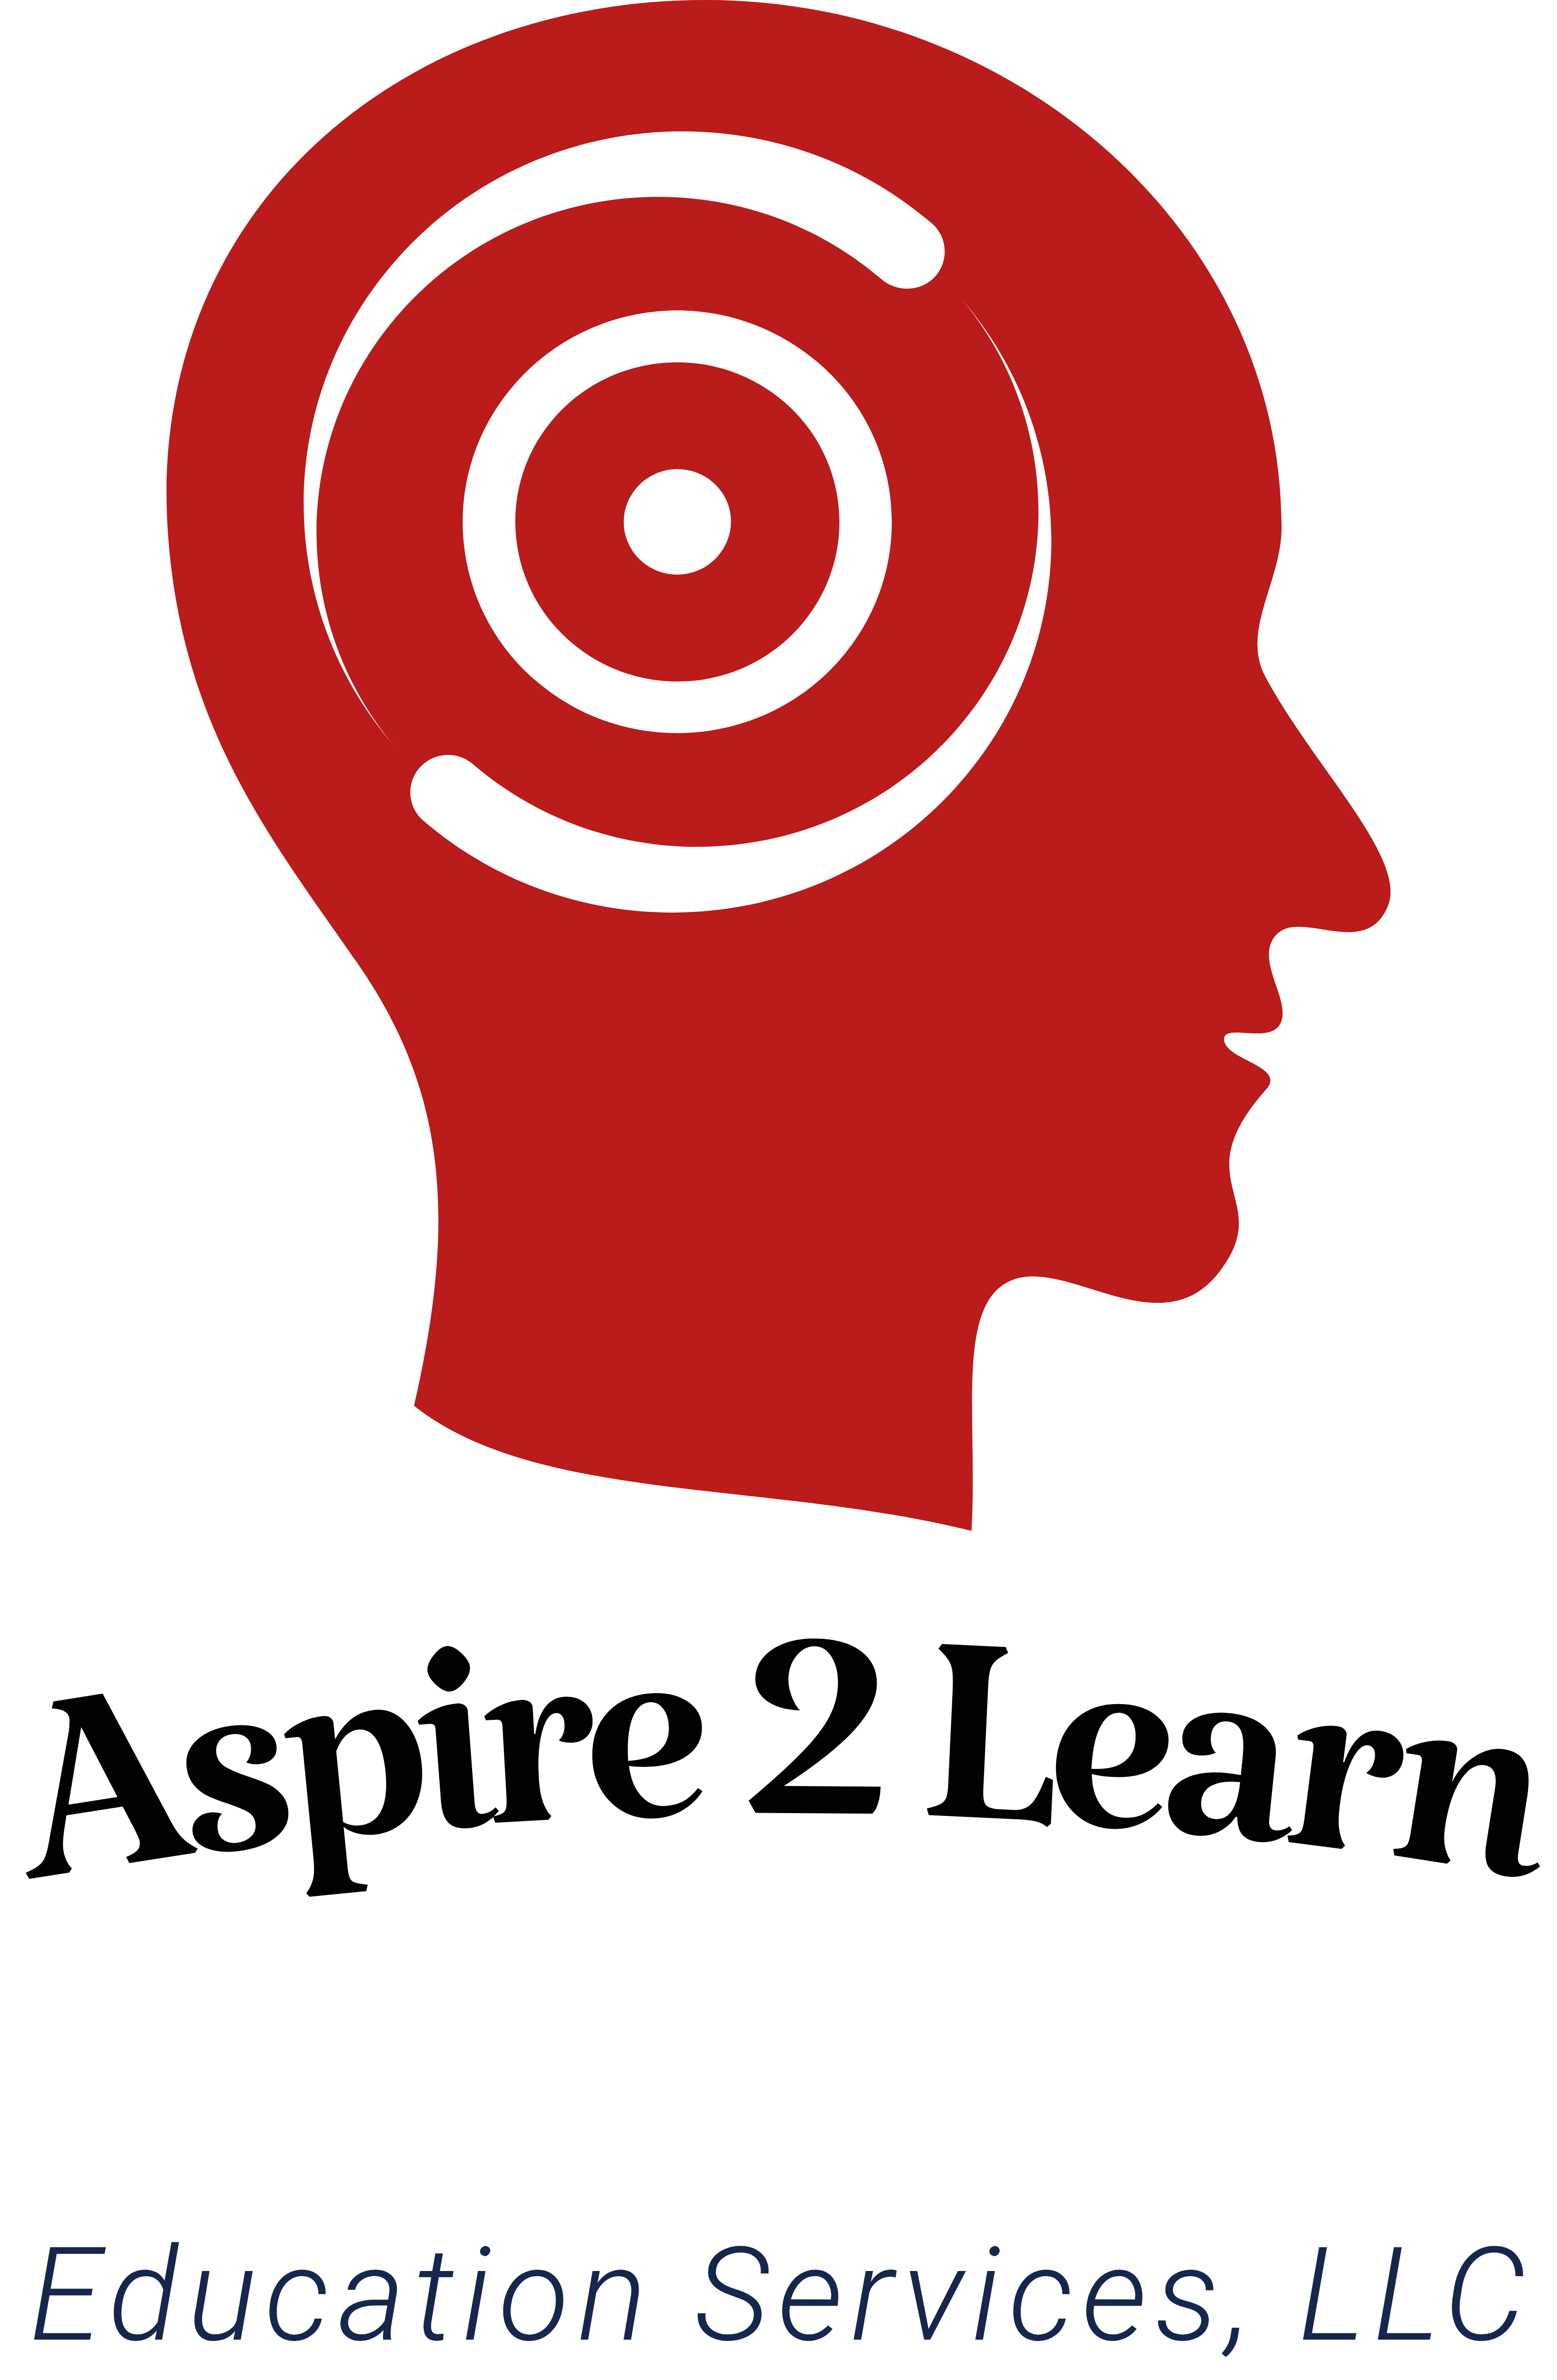 Aspire 2 Learn Education Services, LLC logo